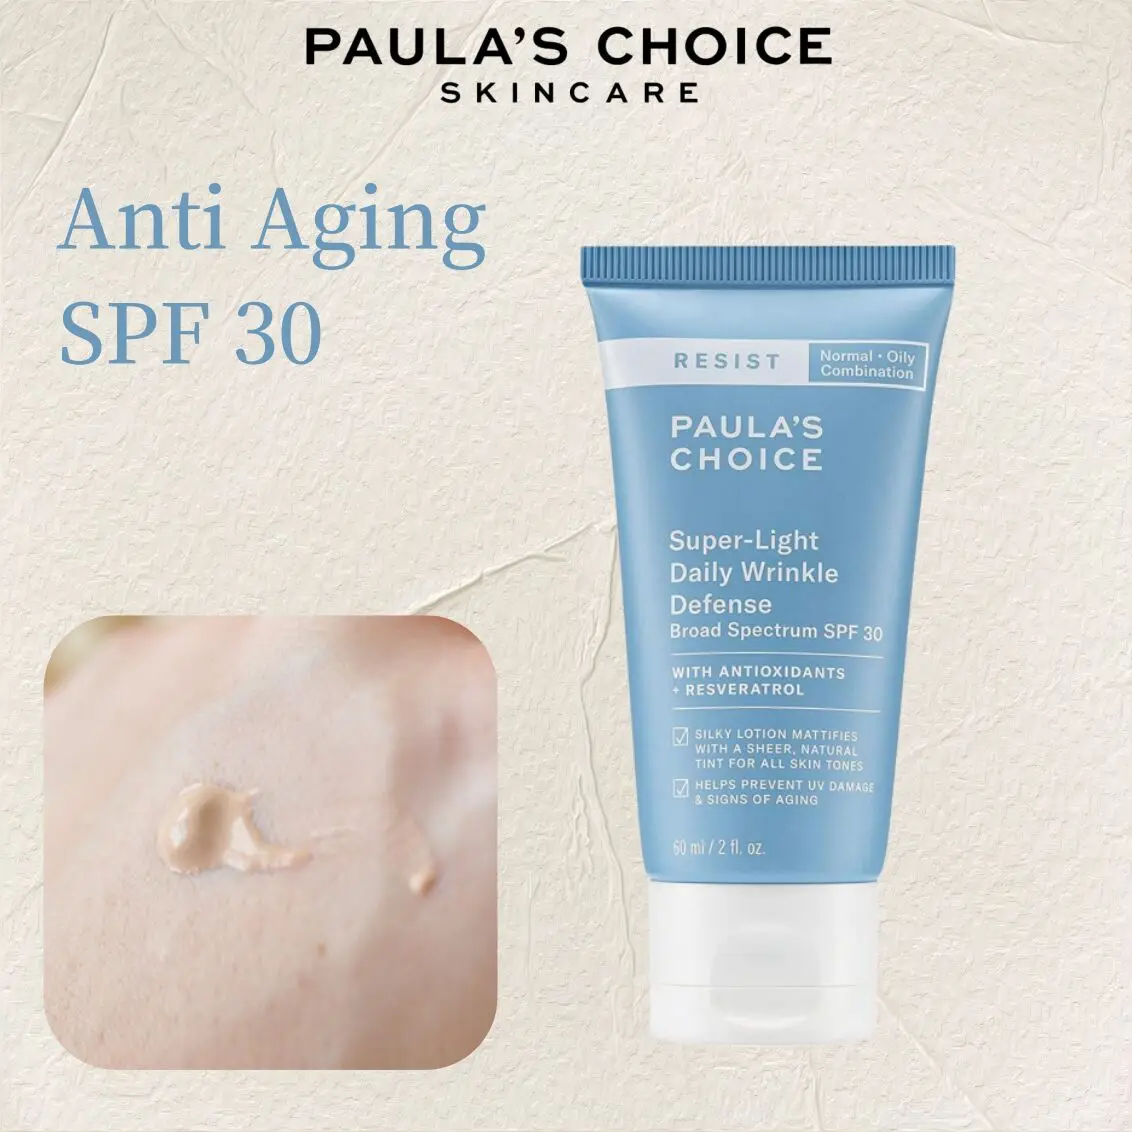 

Paulas Choice RESIST Super-Light Daily Wrinkle Defense 60ml SPF 30 With Antioxidants + Resveratrol Matte No-Tinted Sunscreen